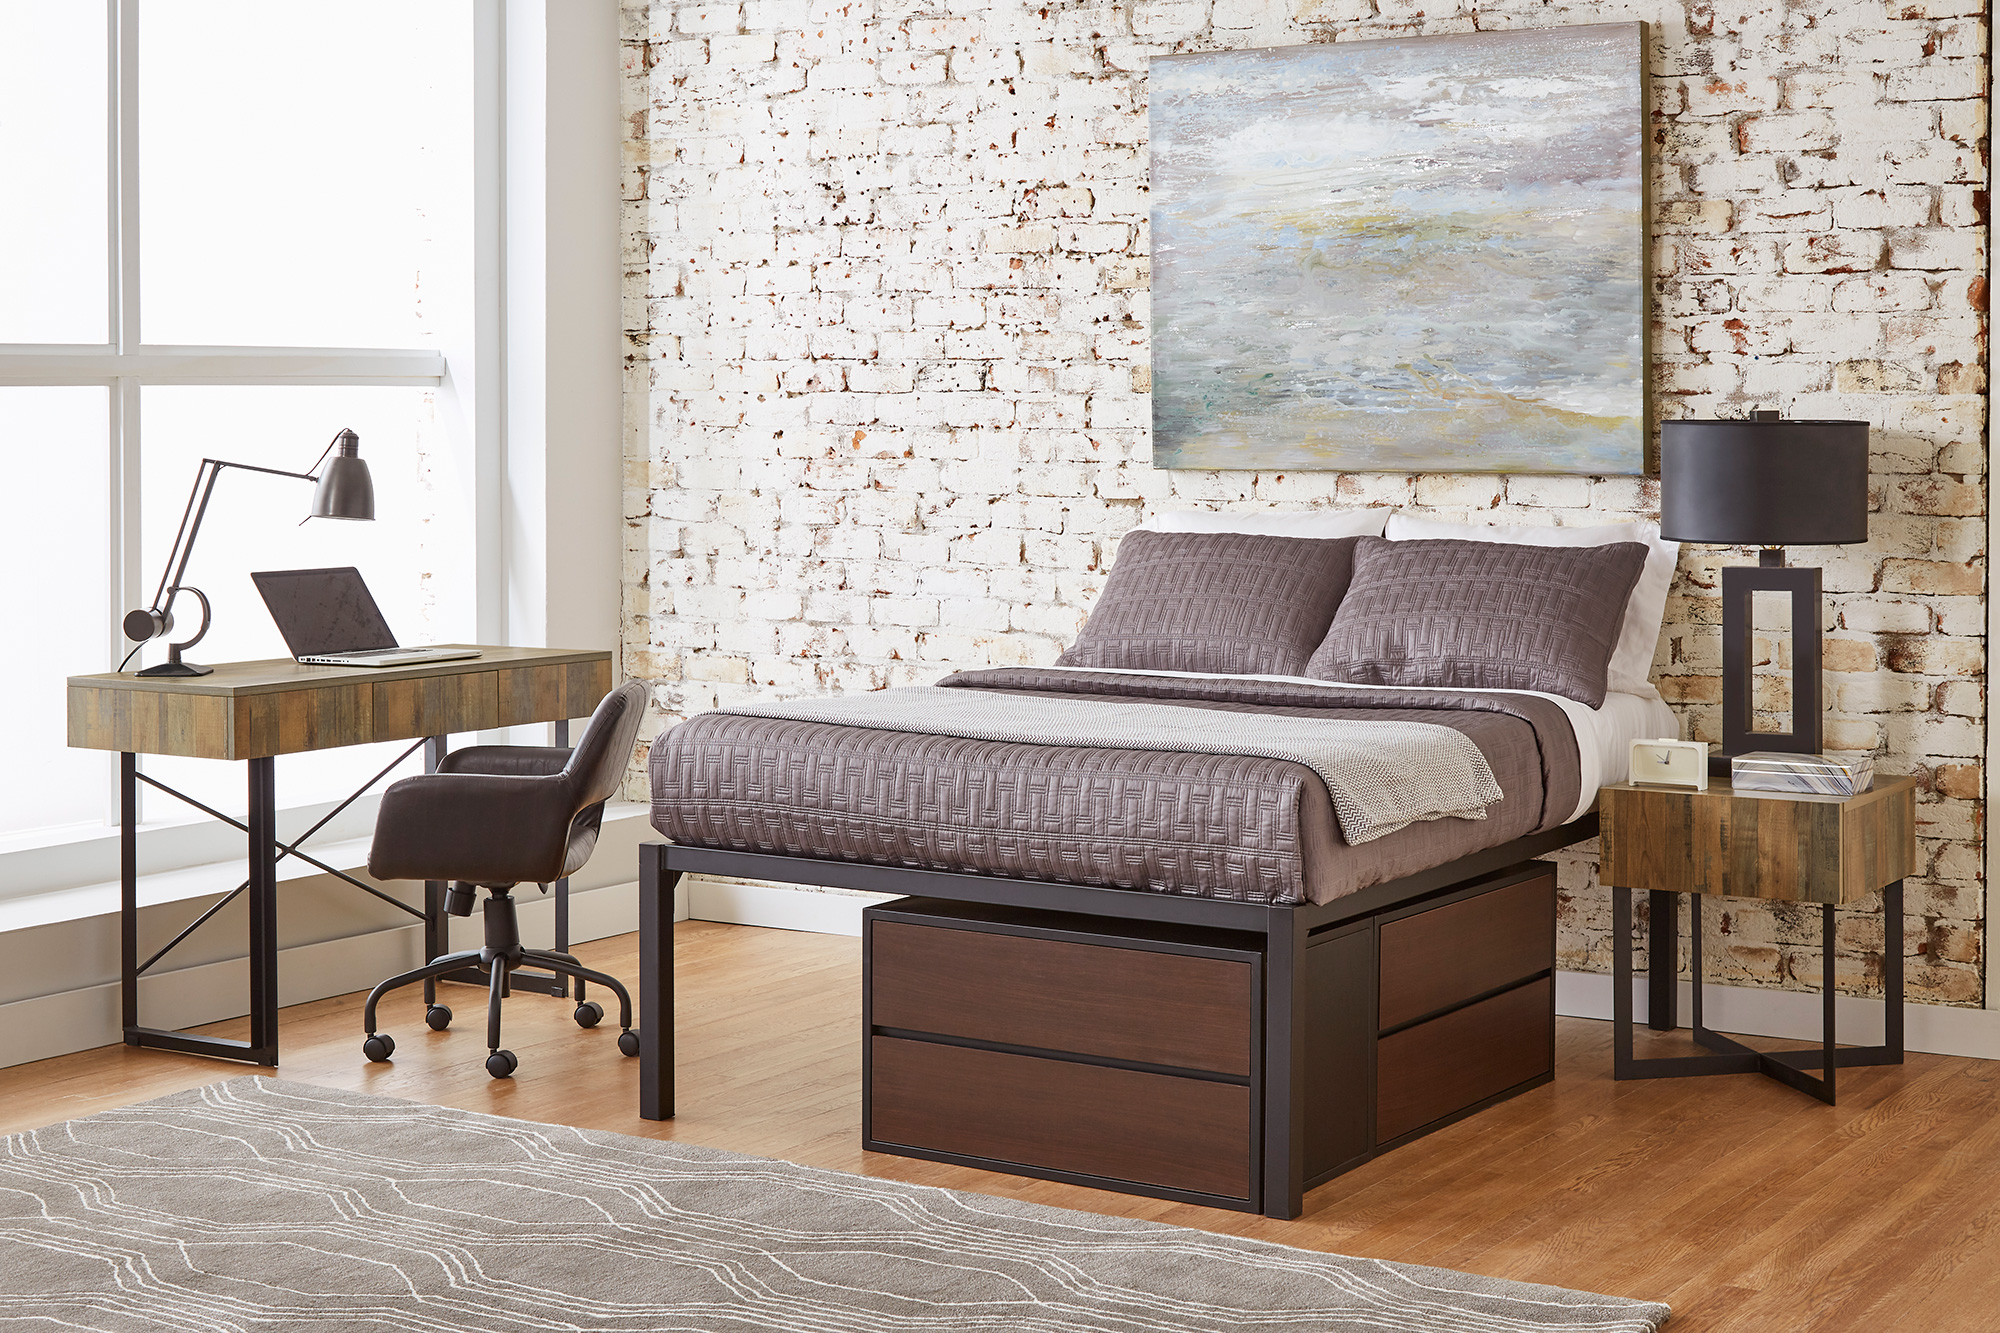 F3 NOLA bedroom furniture for student housing